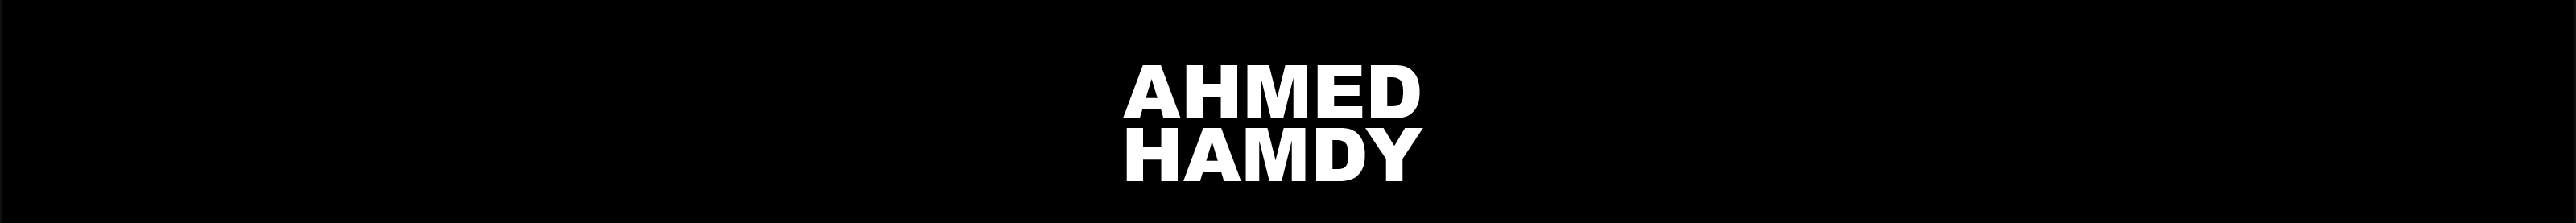 Ahmed Hamdy ©'s profile banner